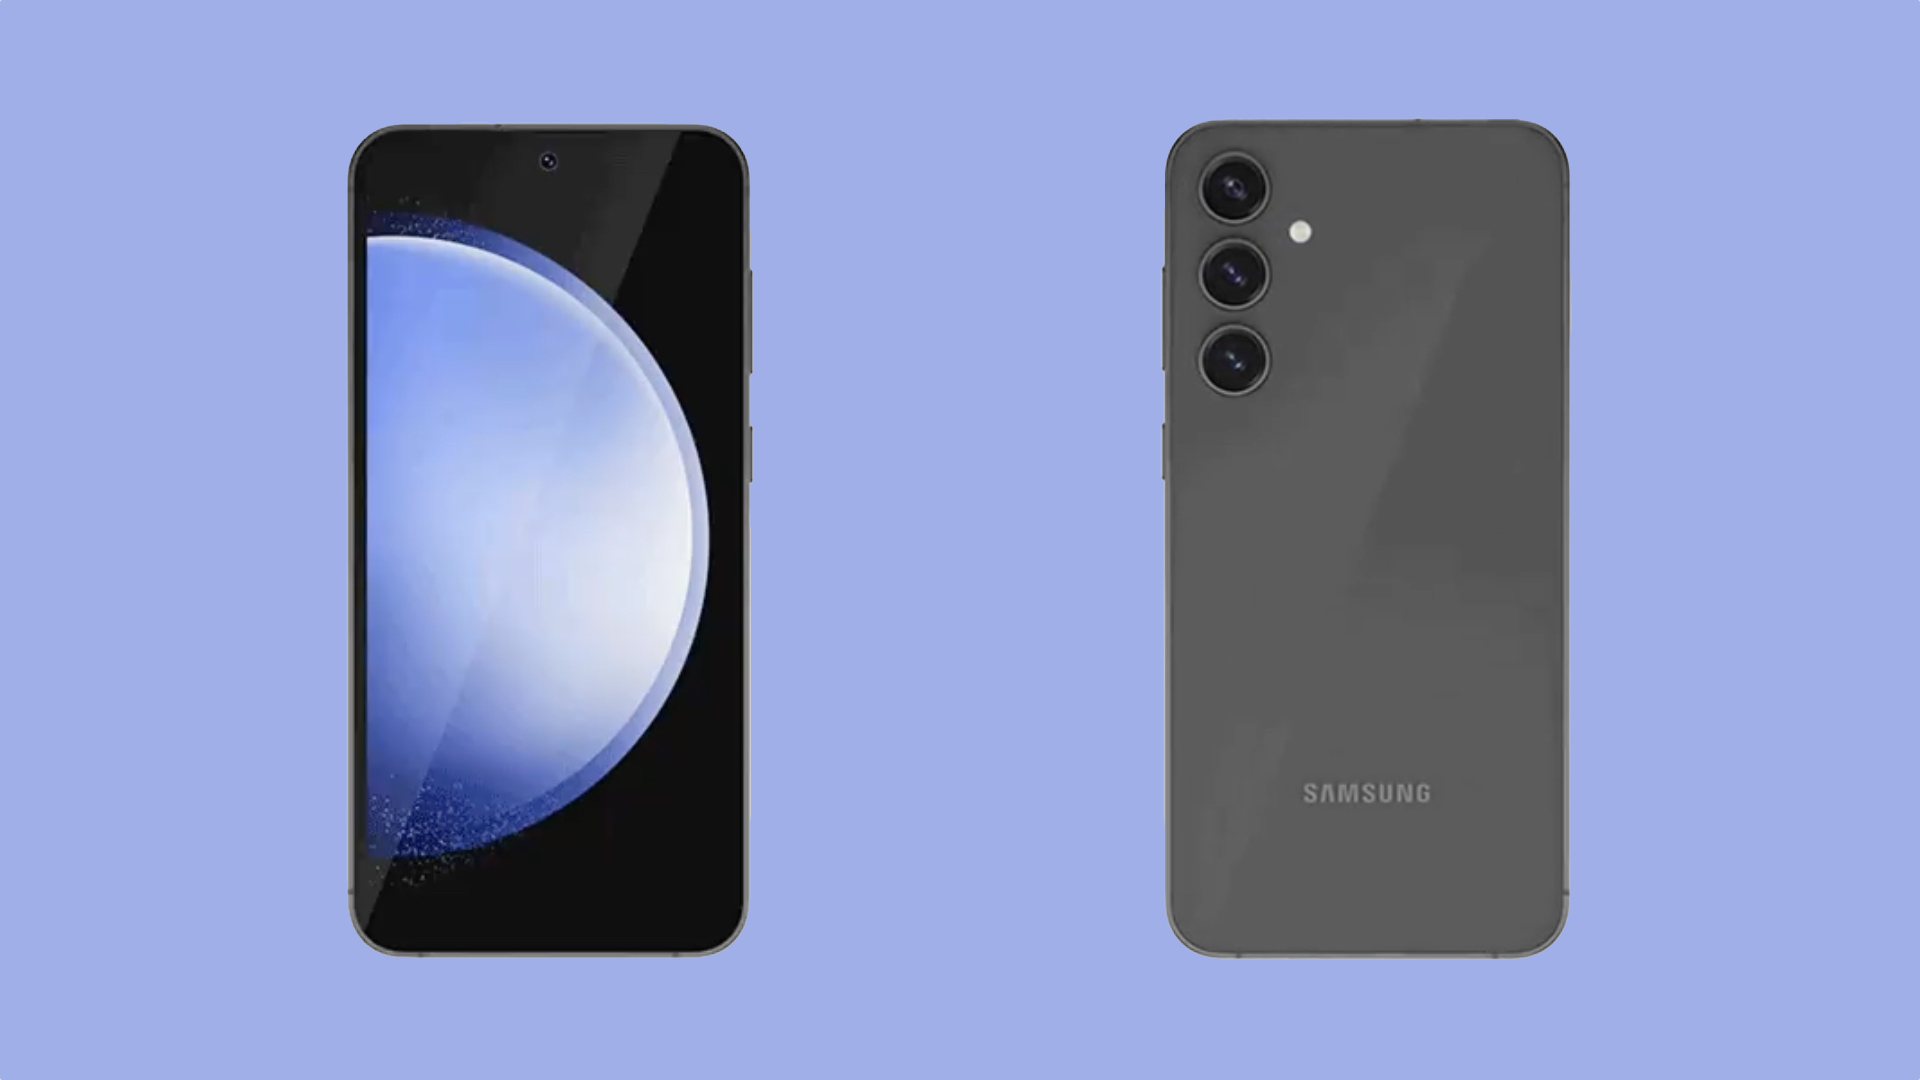 Samsung Galaxy S23 FE Design